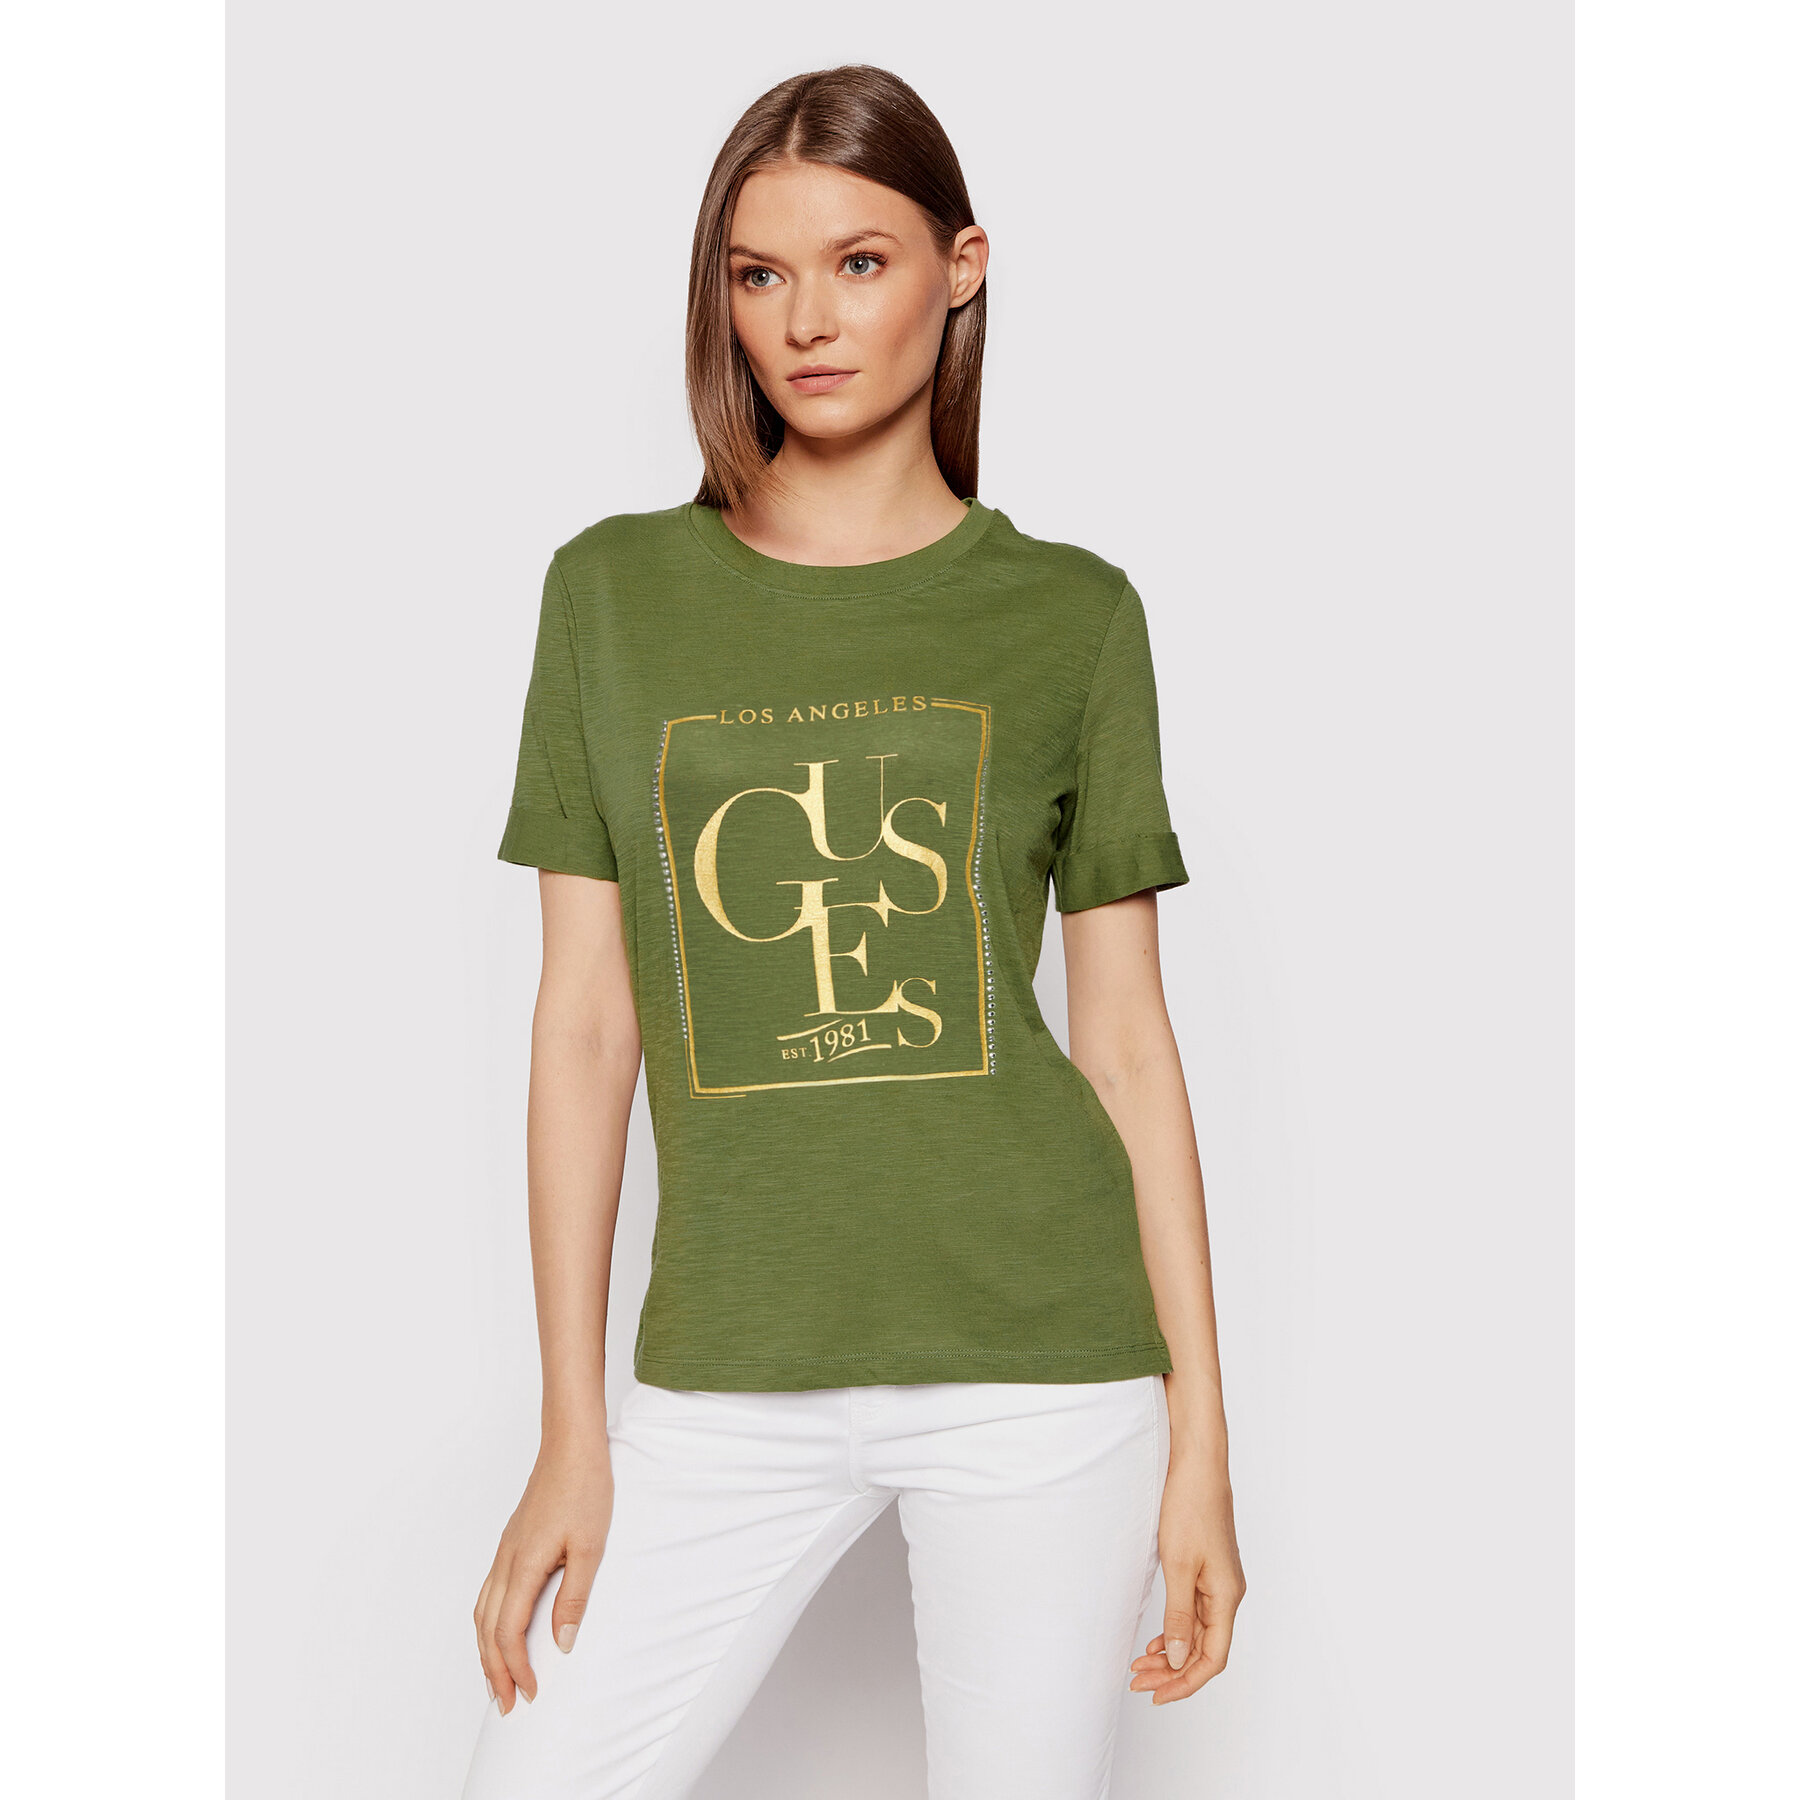 Tee-shirt vert Guess élégant pour femme - W1yi0q R8g00